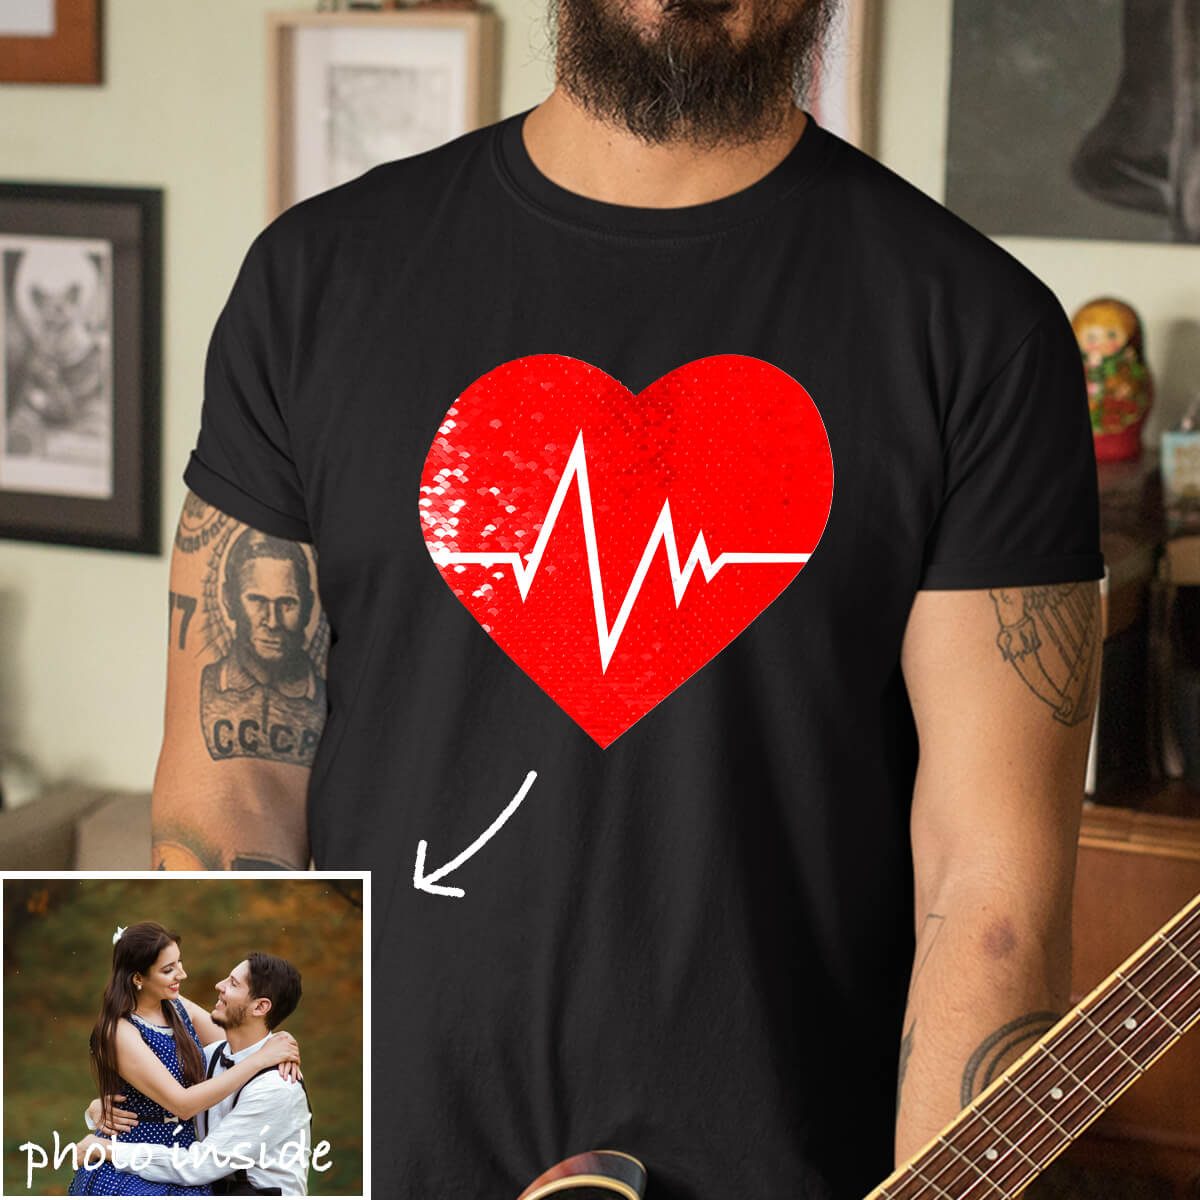 Custom Heart Beat Sequin Shirt (Double Print)